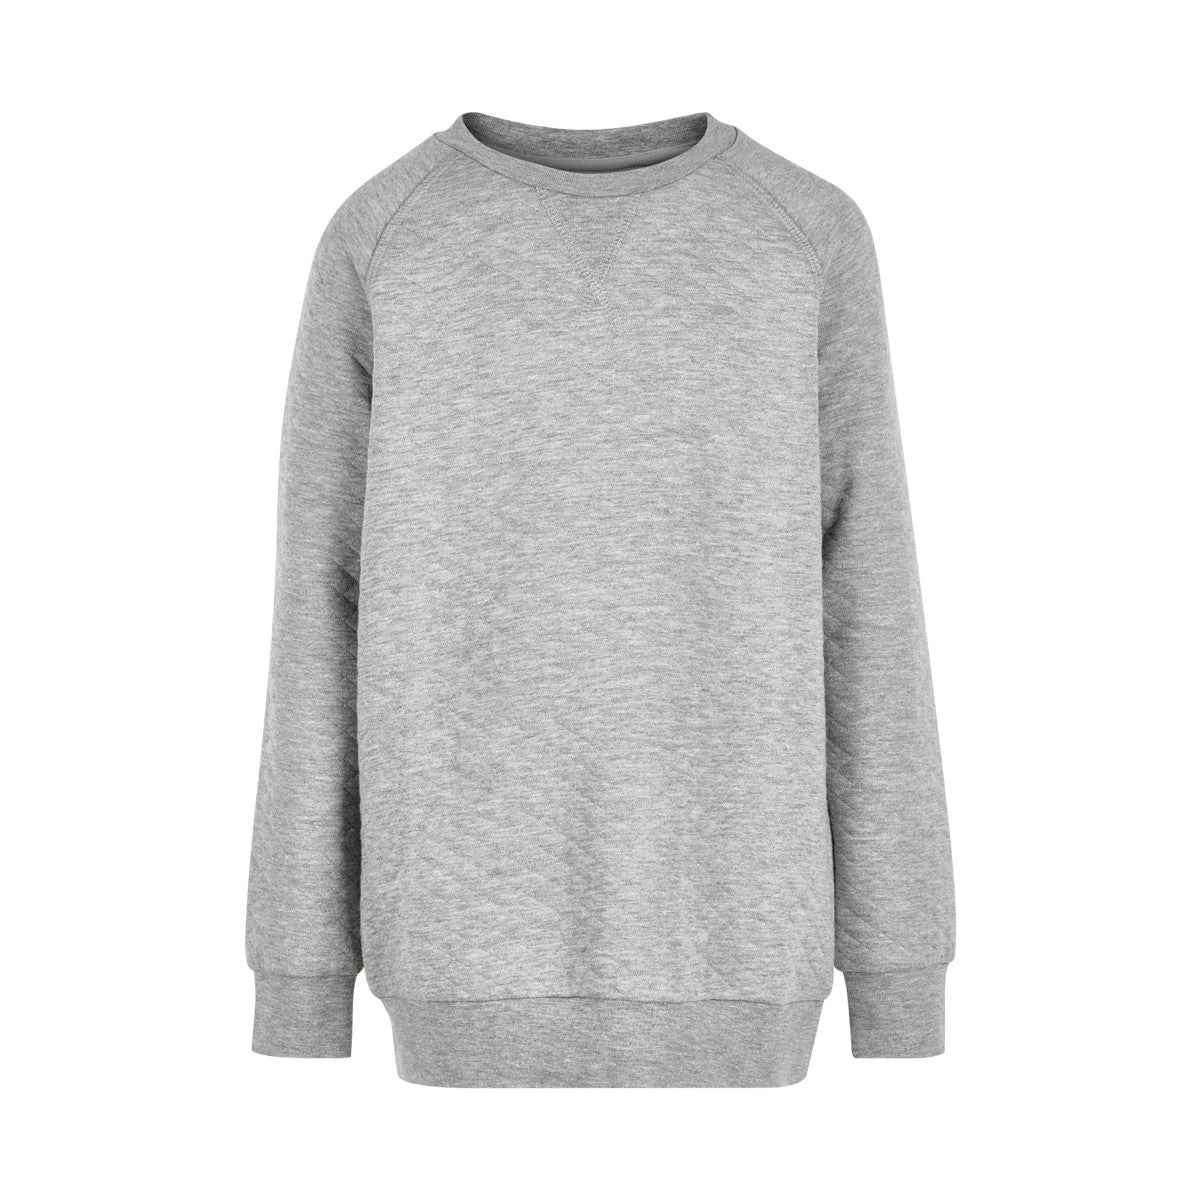 THE NEW - Sweatshirt, Cassy (TN1387) - Light Grey Melange